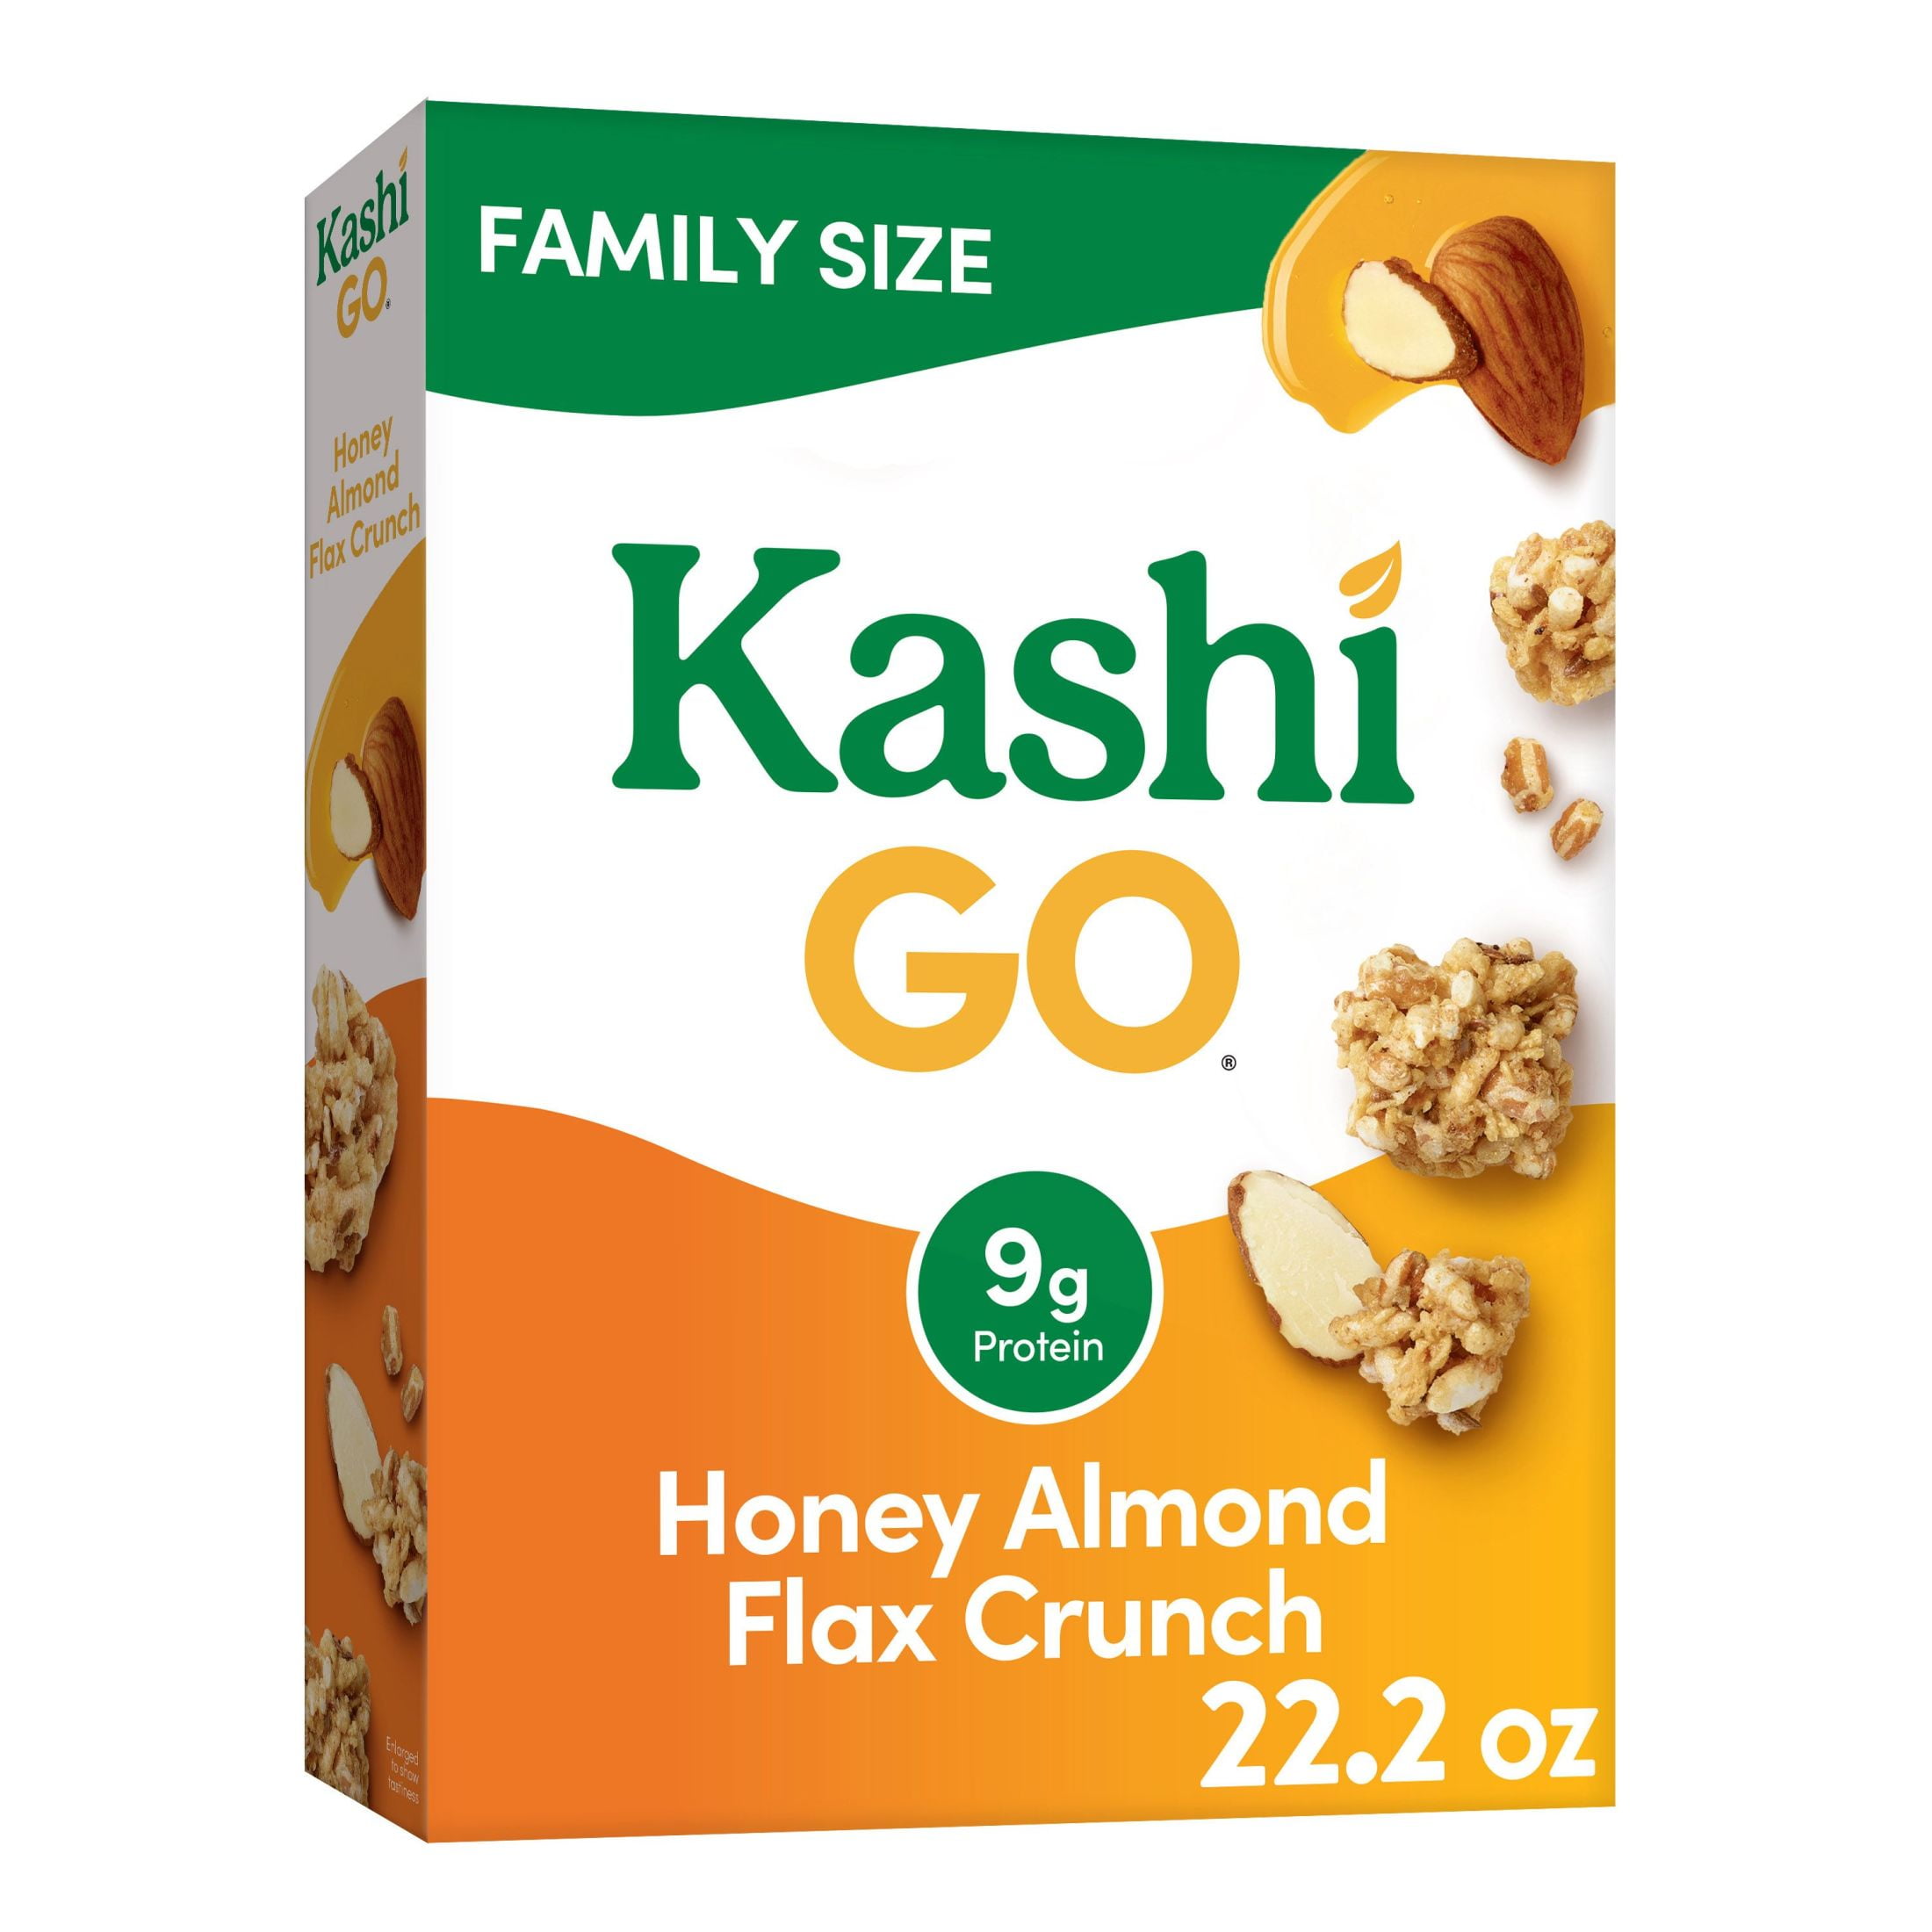 Kashi GO Honey Almond Flax Crunch Breakfast Cereal, 22.2 oz